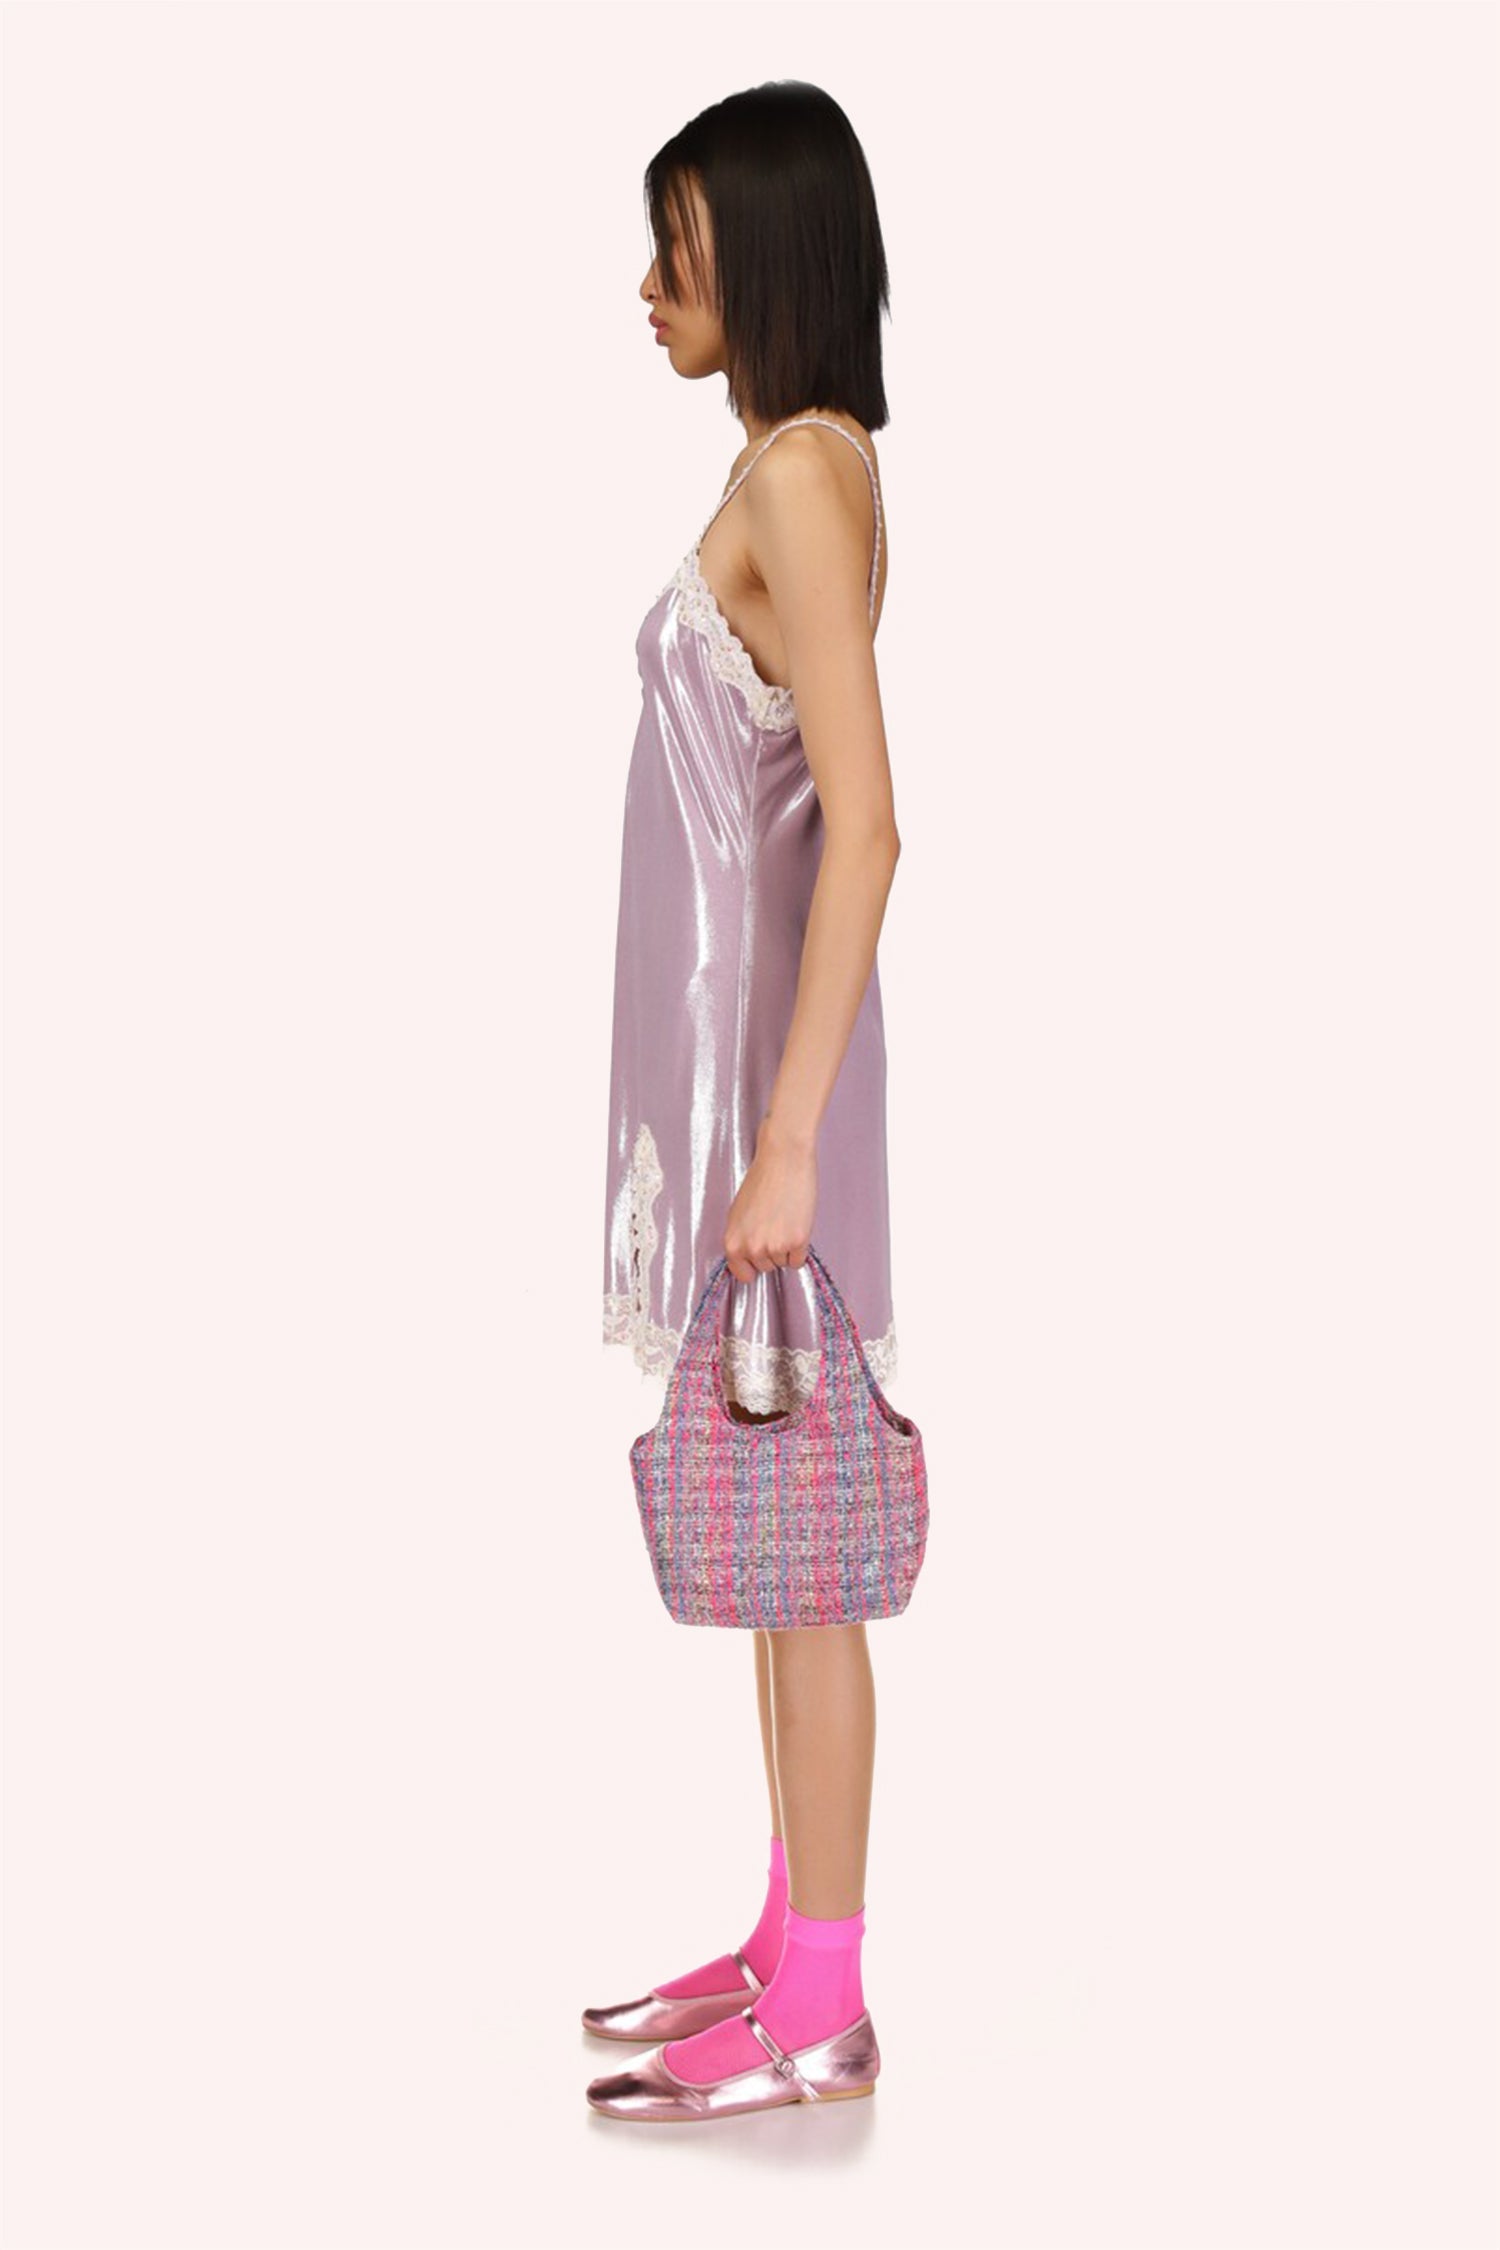 Lace & lilac just make sense 😍 Bag this slip dress online & instore. 🔍  Slip dress: 102332379 - R159.99 #mrprice #mrpricefashion